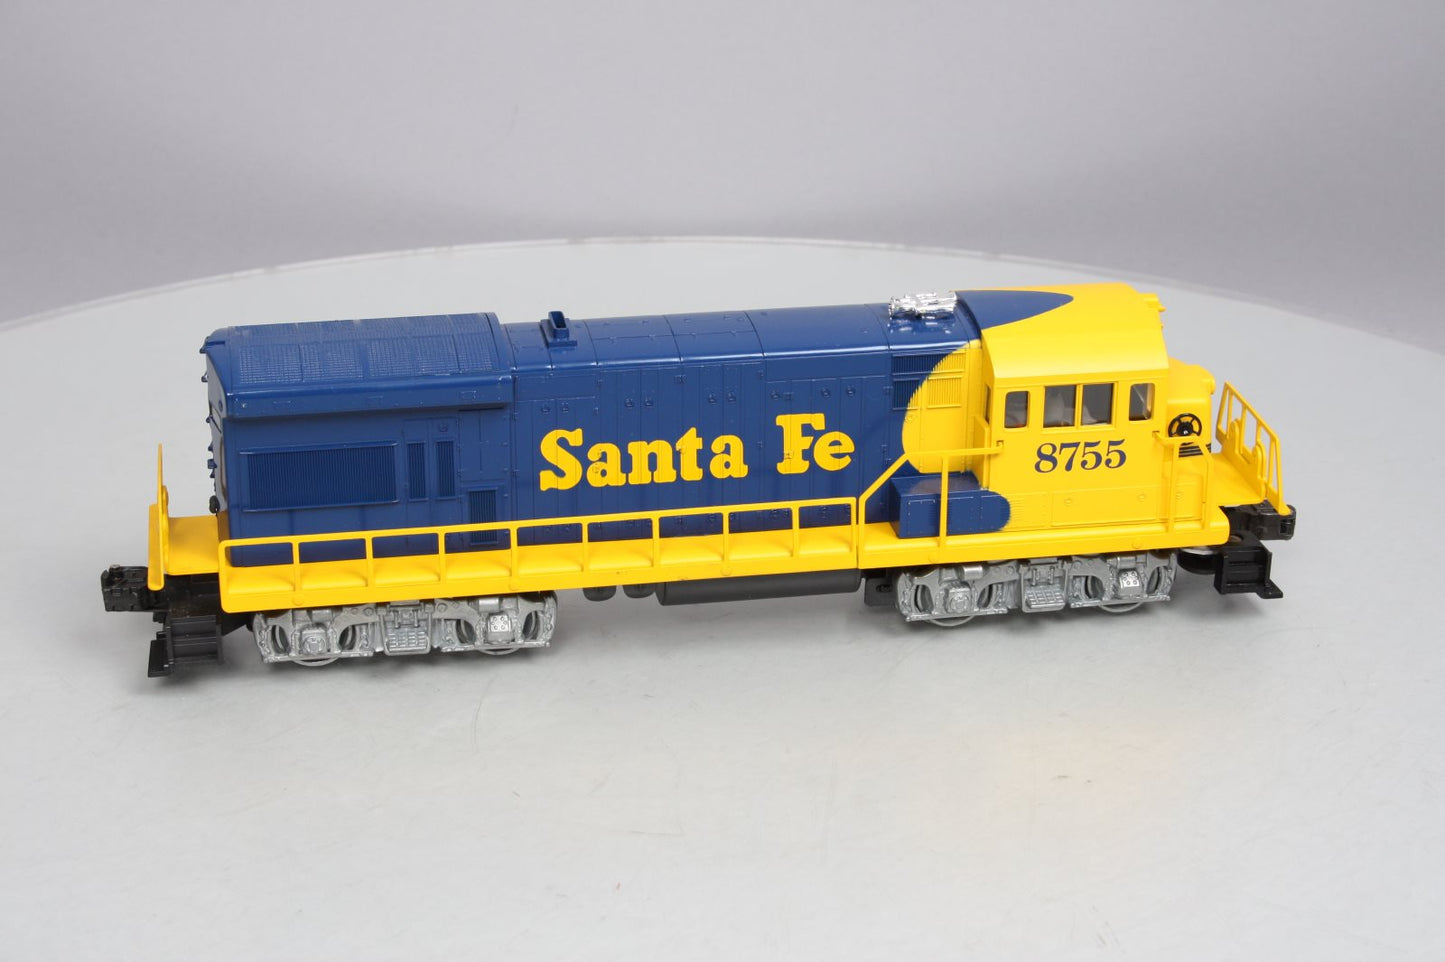 Lionel 6-8755 Santa Fe U36B Diesel Locomotive EX/Box